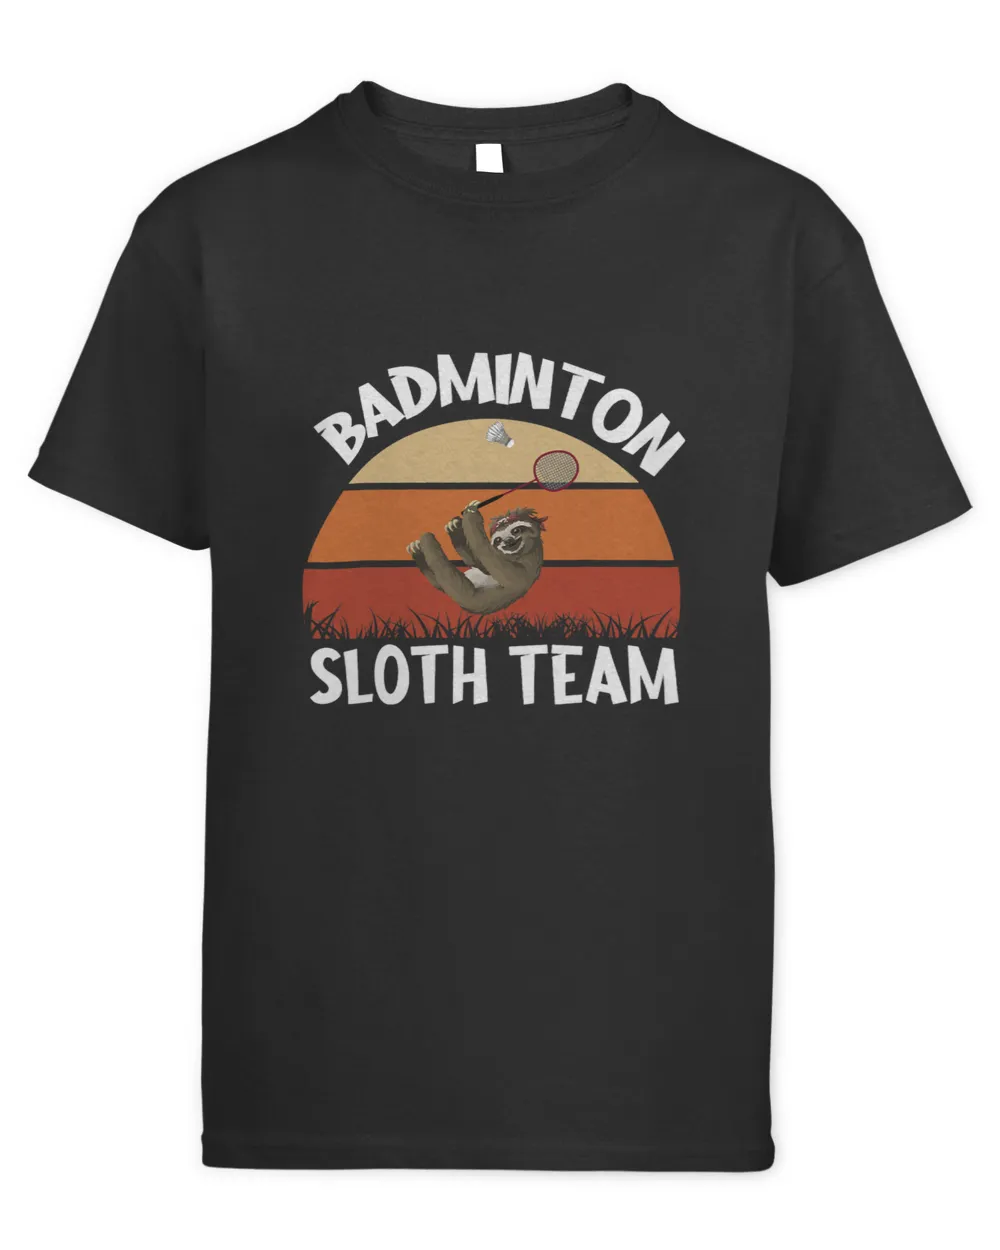 Cute Sloth Badminton Sloth team Design for Badminton Players and Sloth Sloths